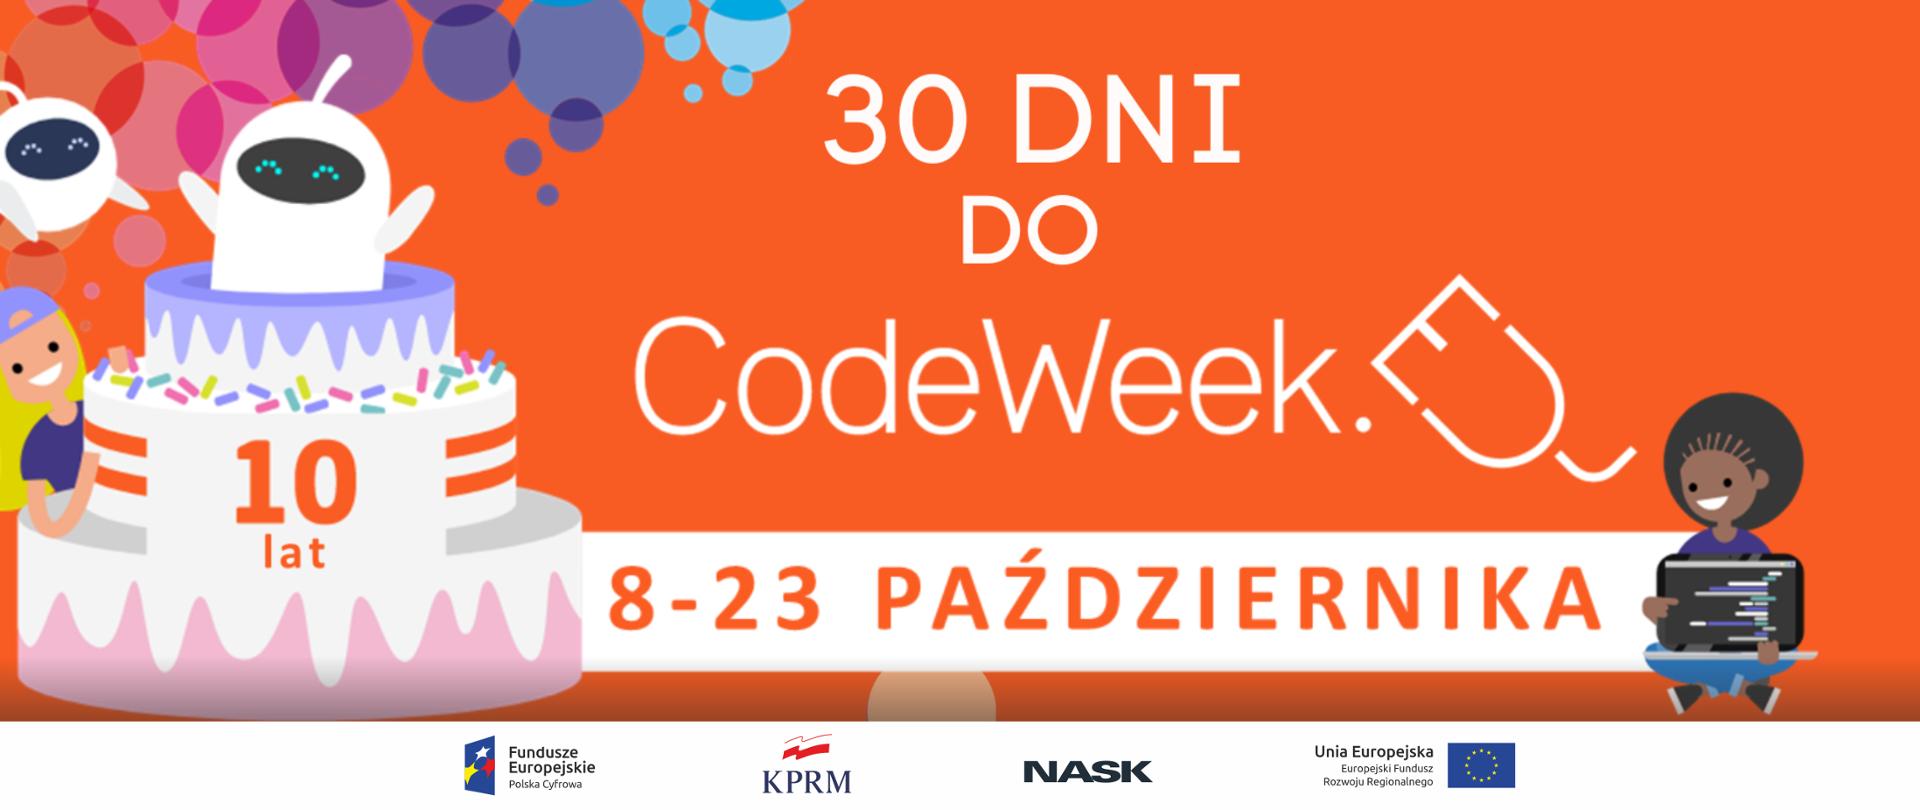 30 dni do CodeWeek